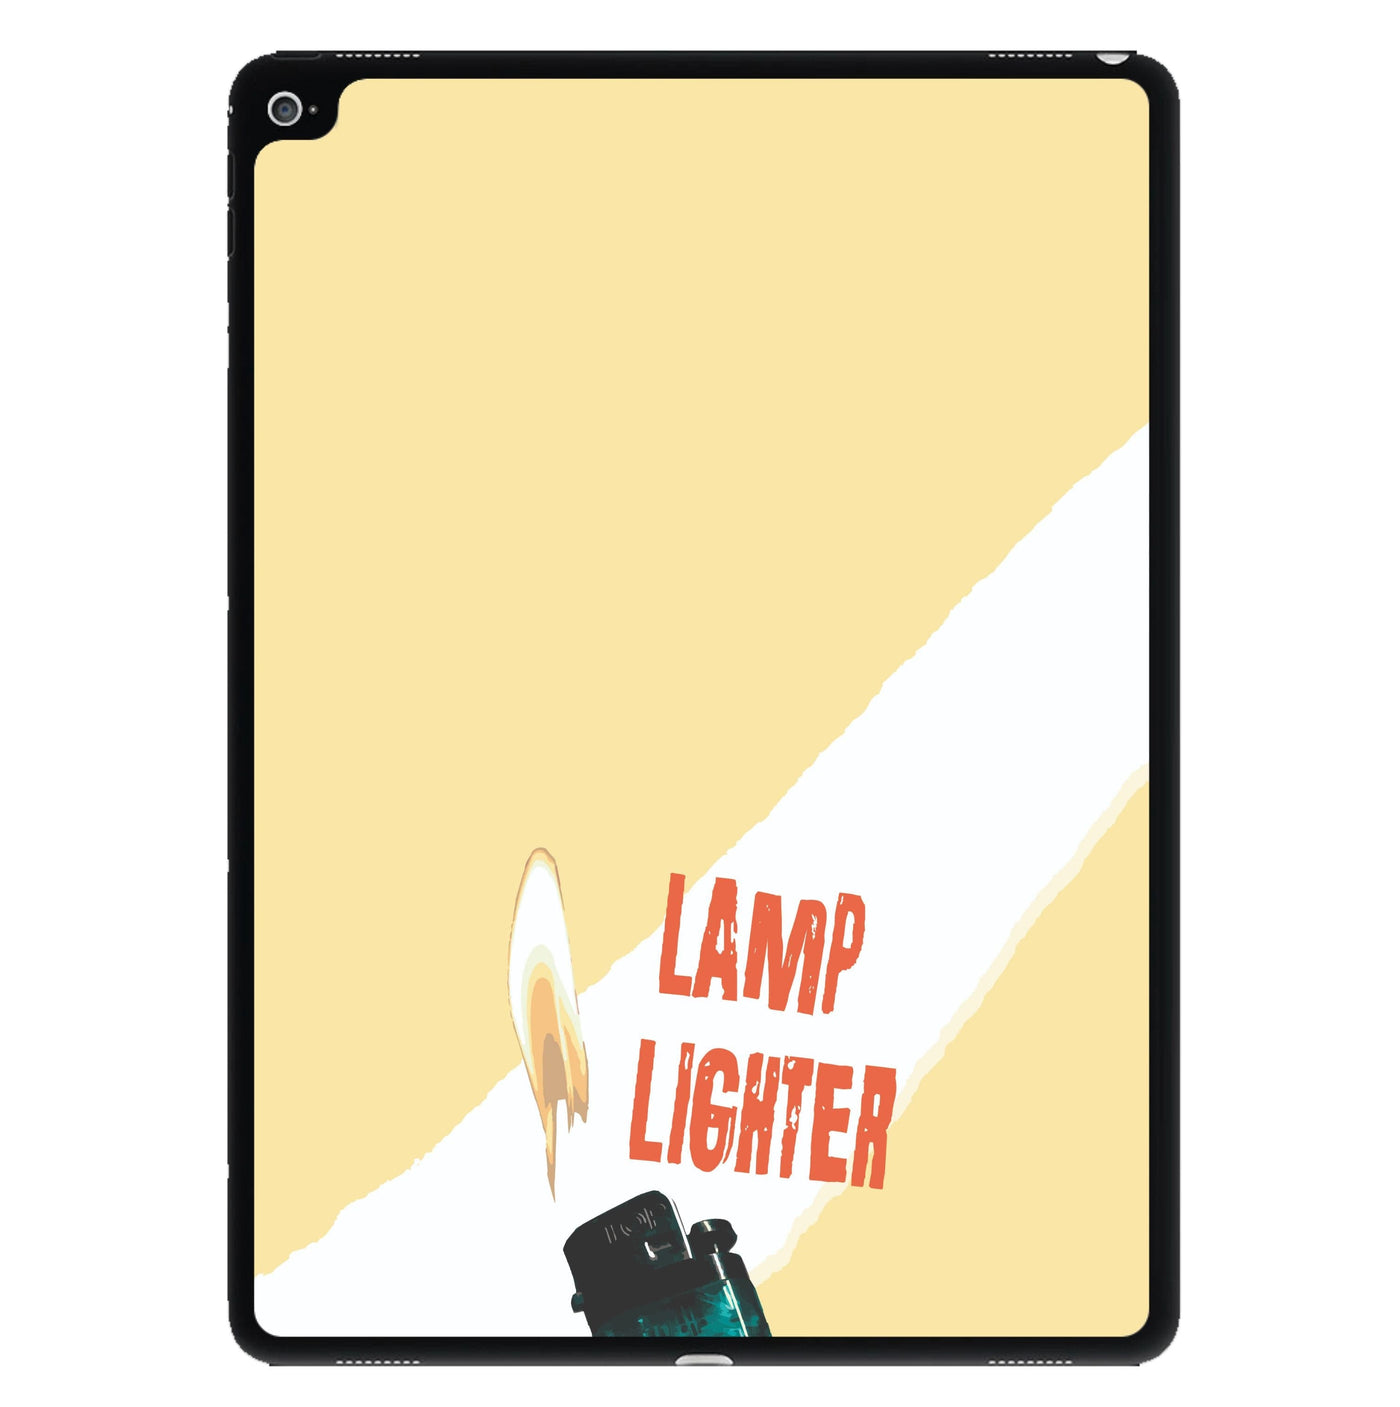 Lamp Lighter - The Boys iPad Case